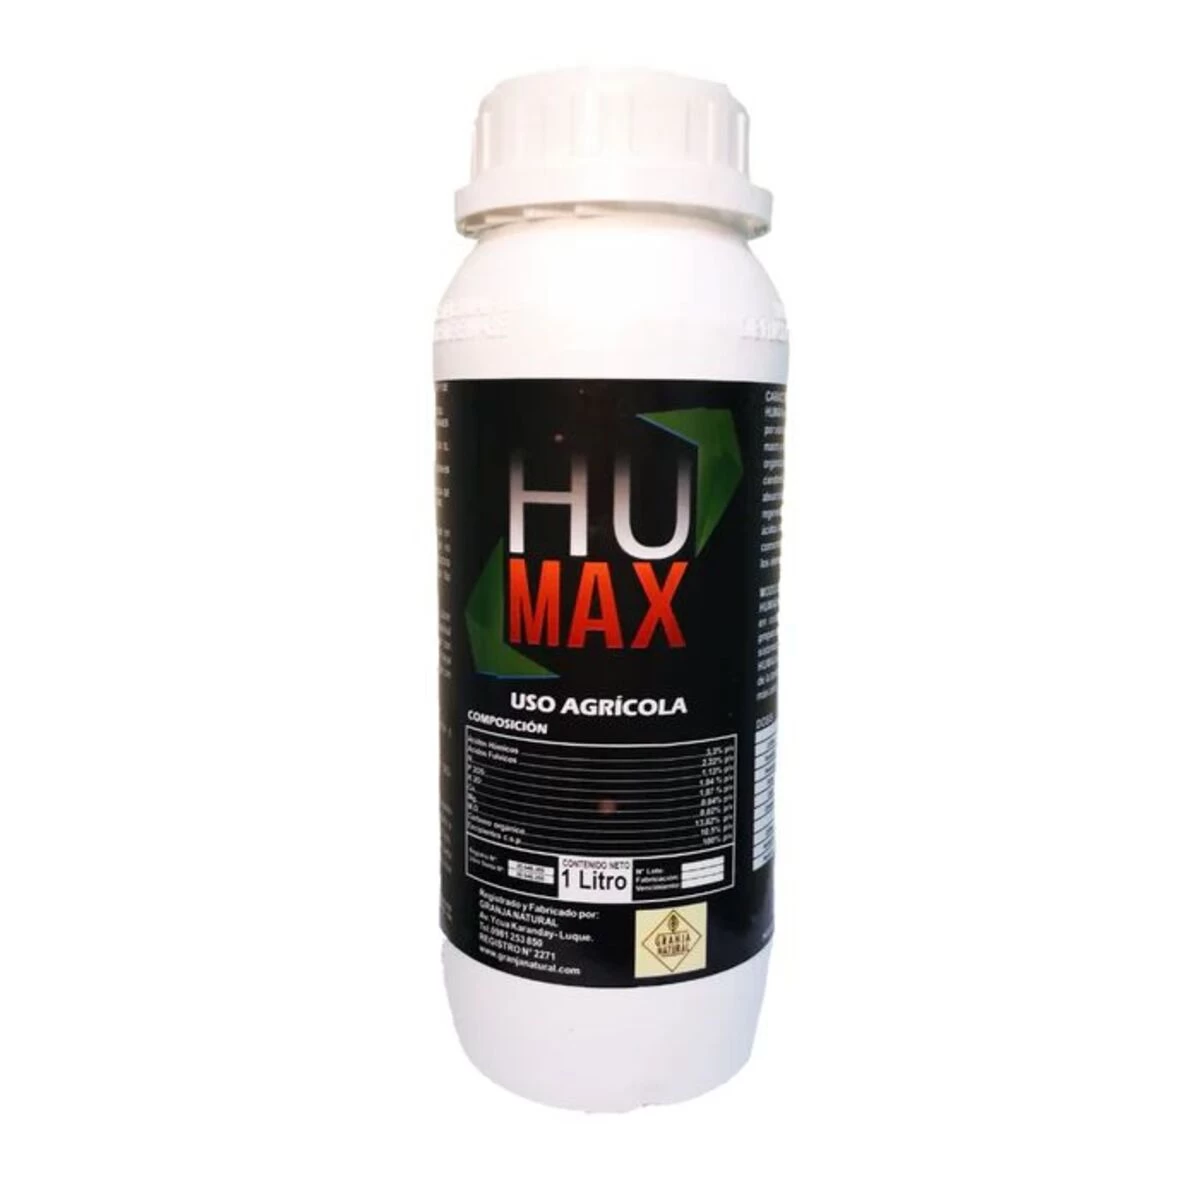 humax-uso-agricola-1l